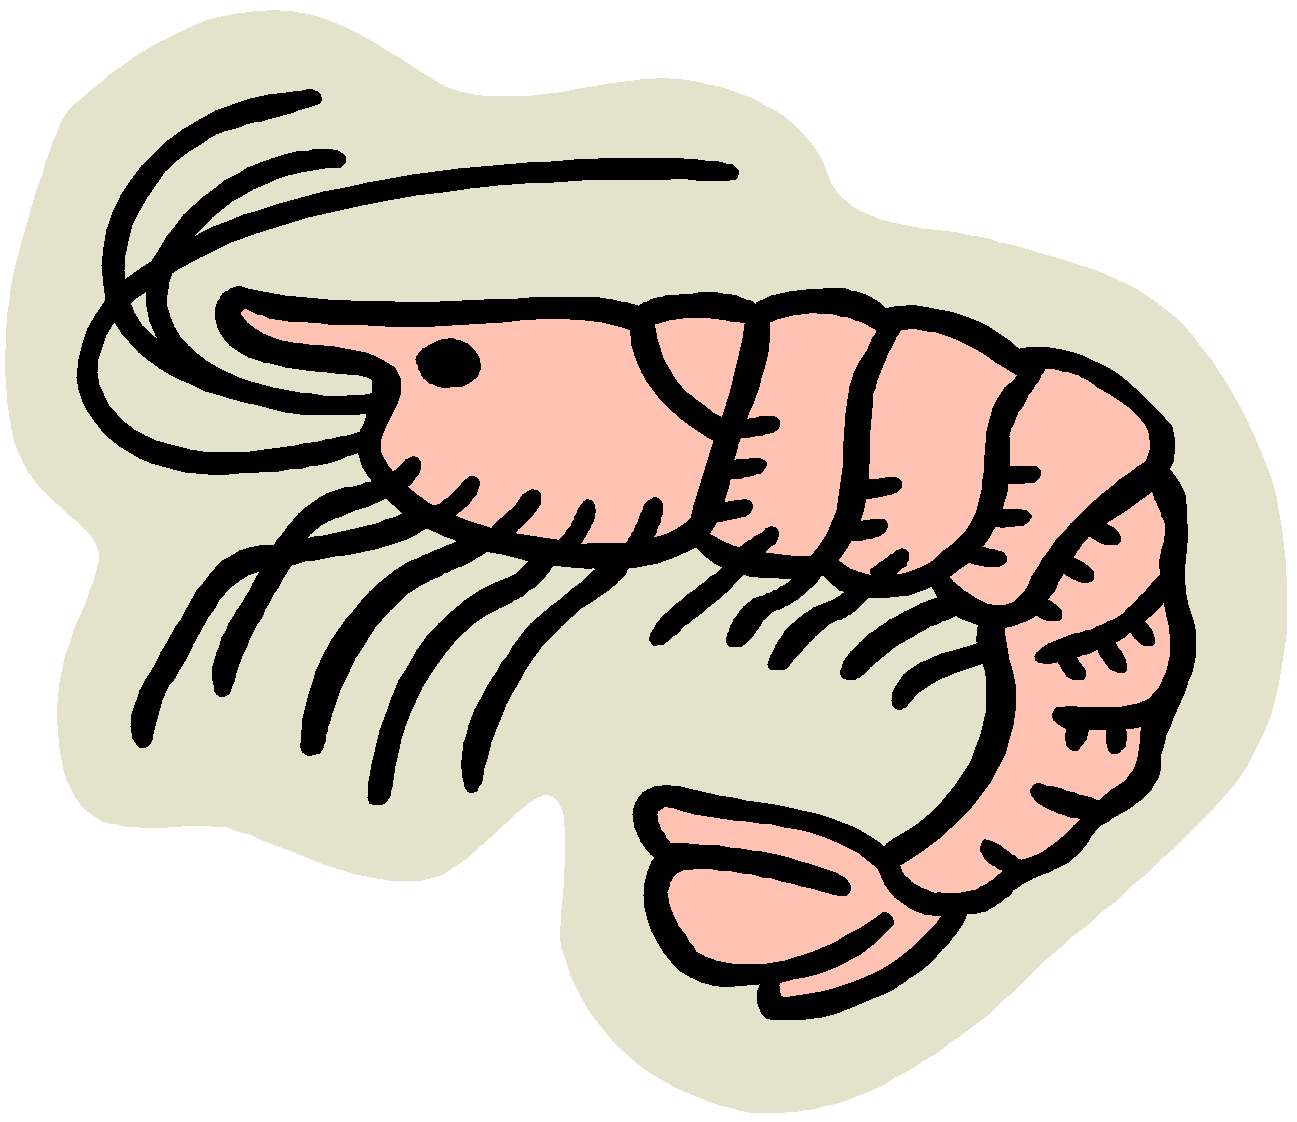 Seafood Clip Art